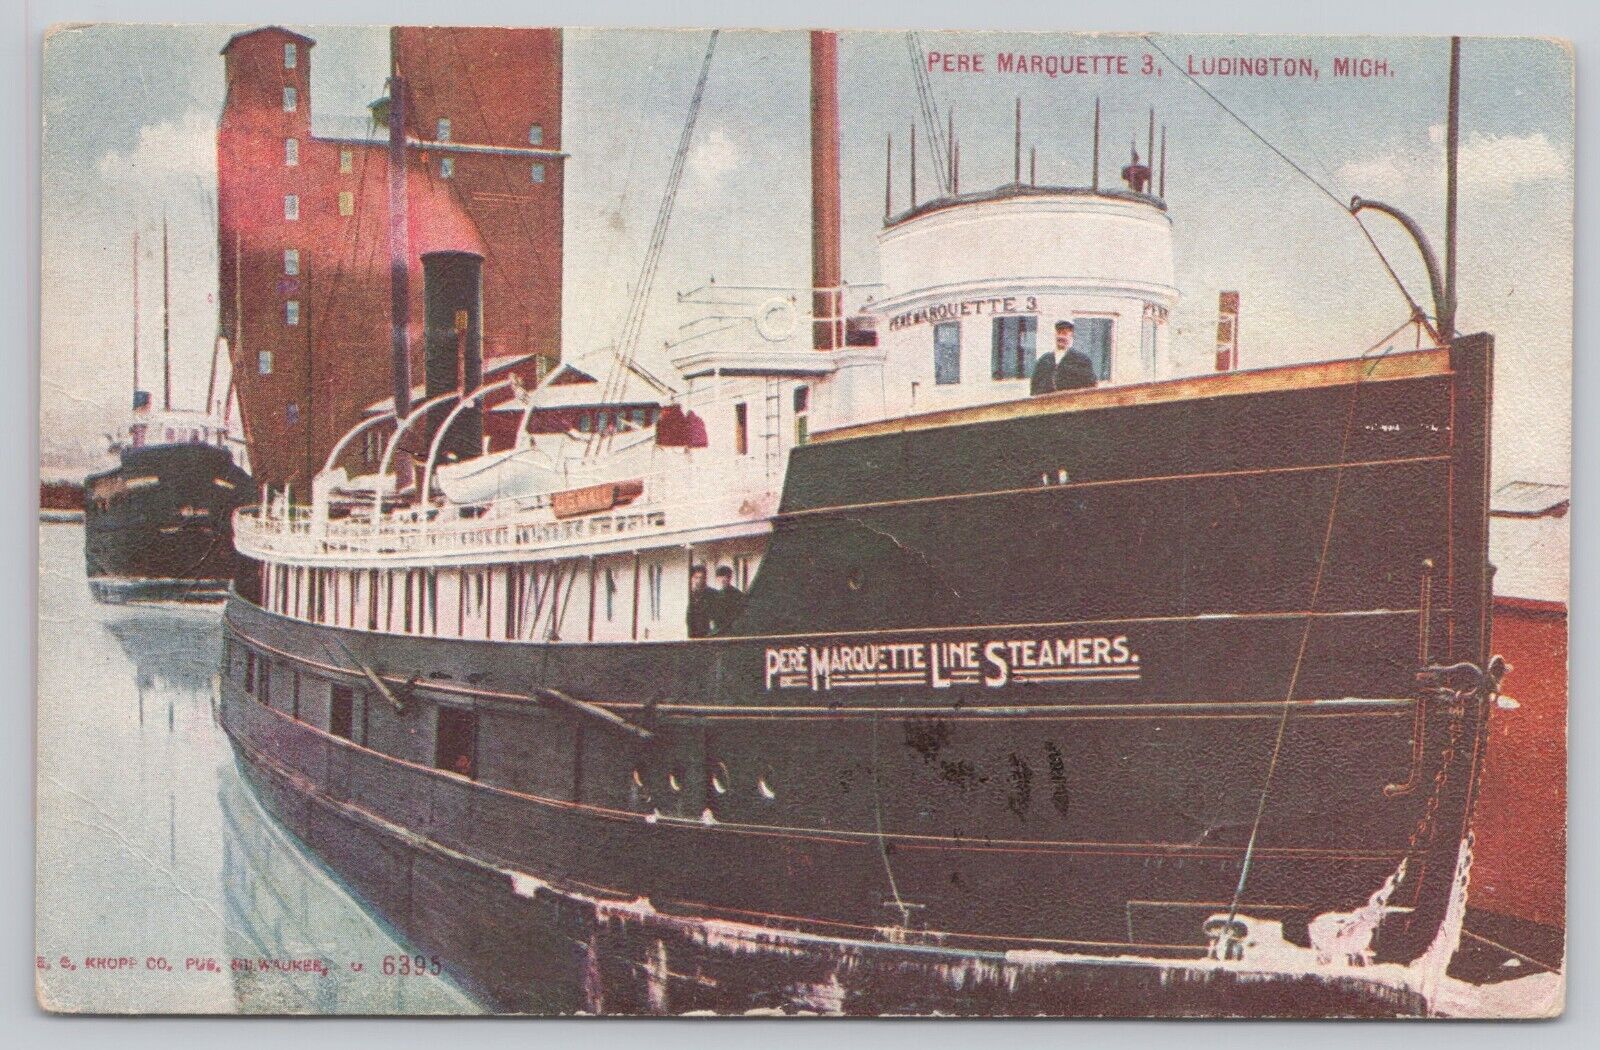 Ludington Michigan, Pere Marquette 3 Steamer US Mail Ship, Vintage Postcard